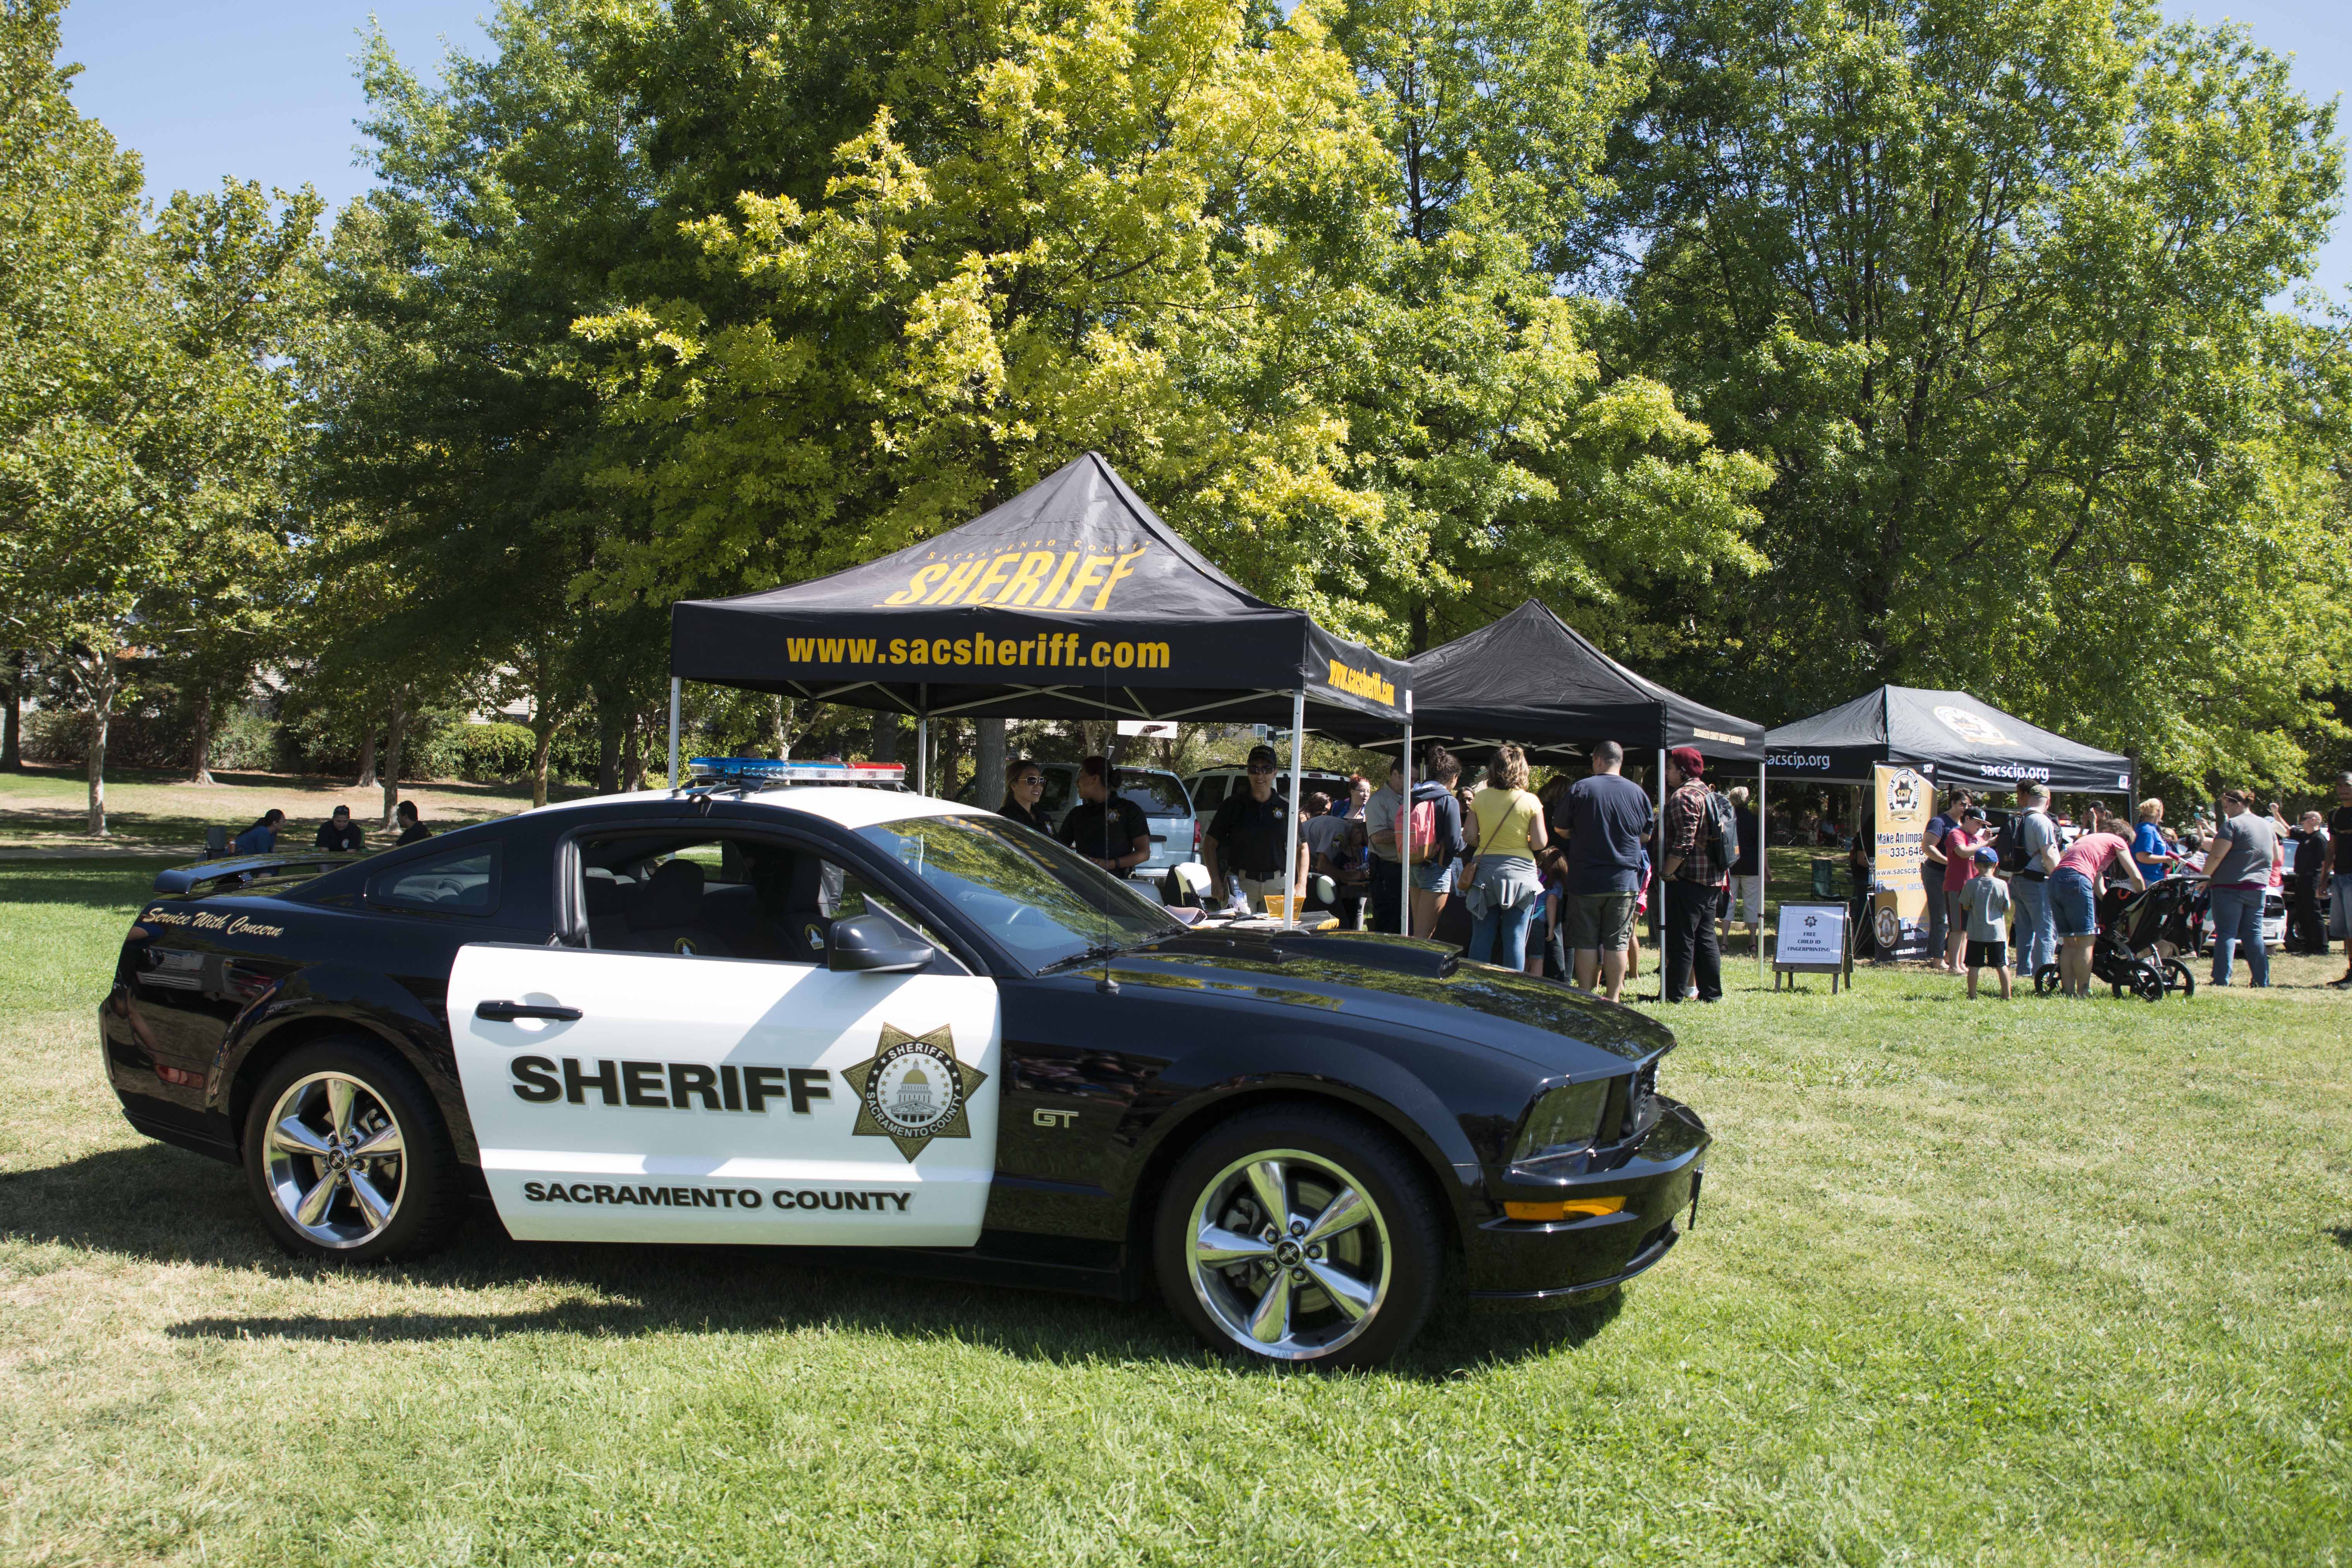 Sacramento Sheriff's Car at Community Event